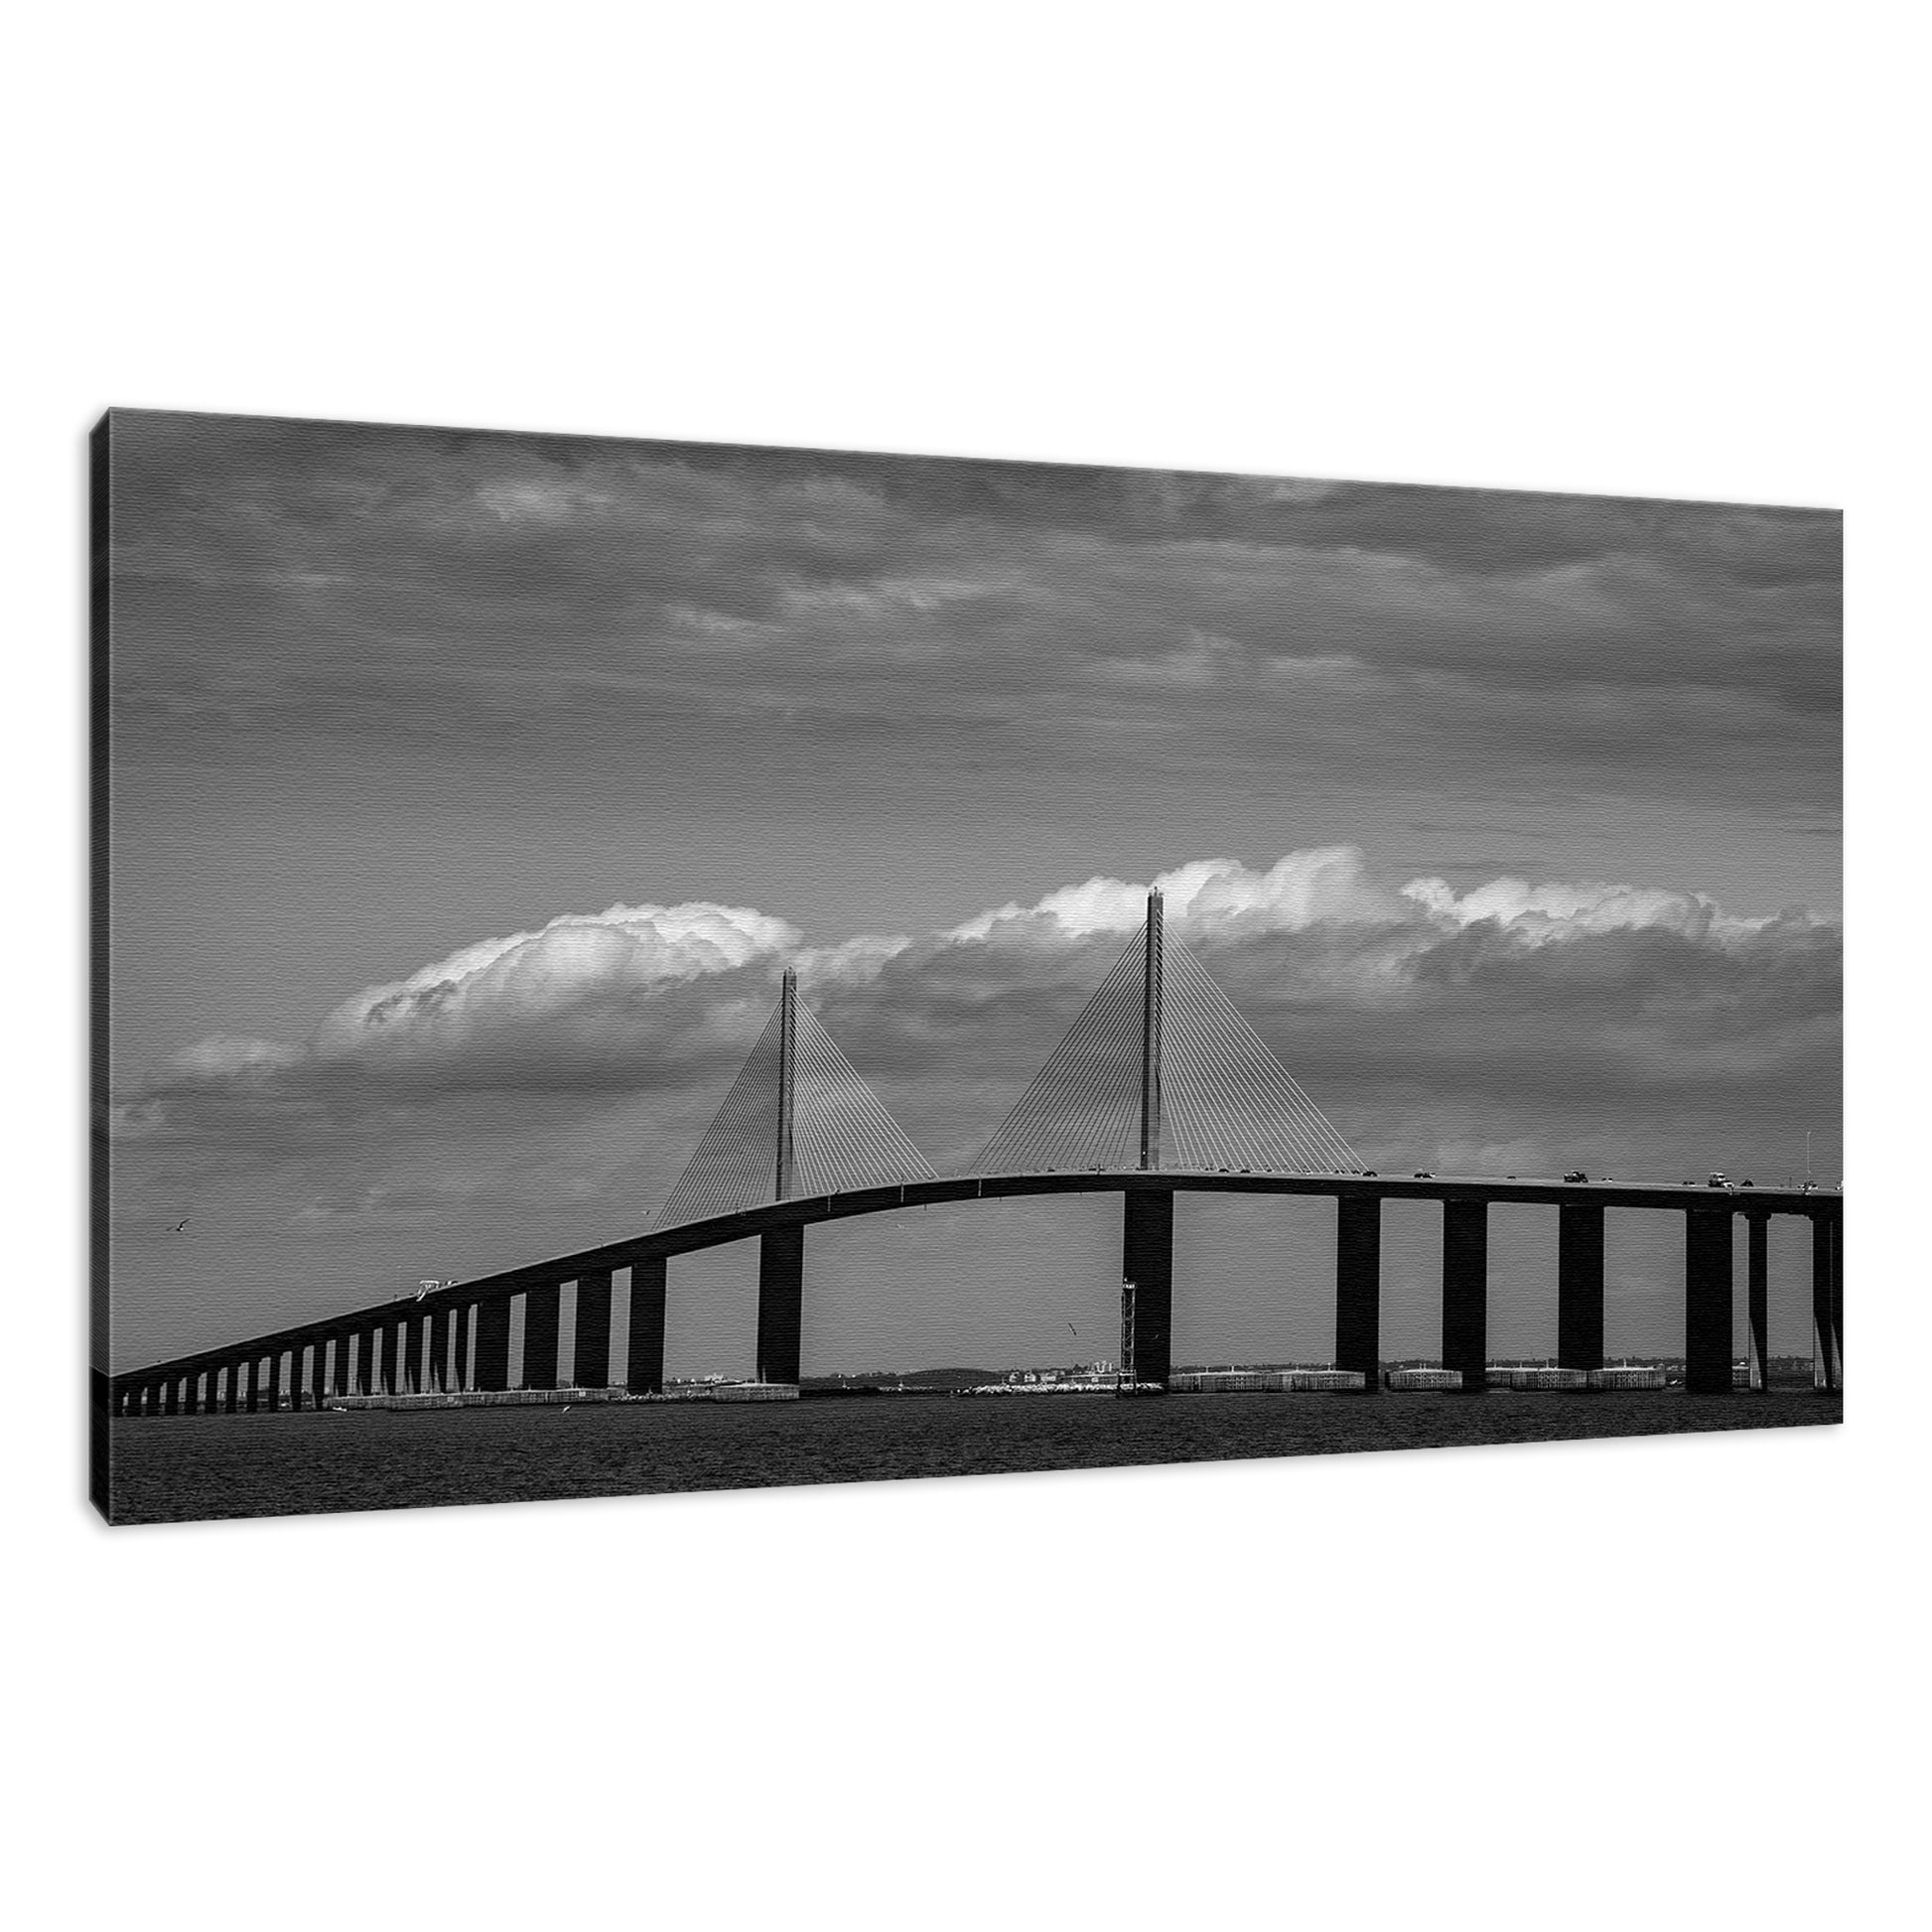 Skyway Bridge Black and White Coastal Landscape Photo Fine Art Canvas Wall Art Prints  - PIPAFINEART